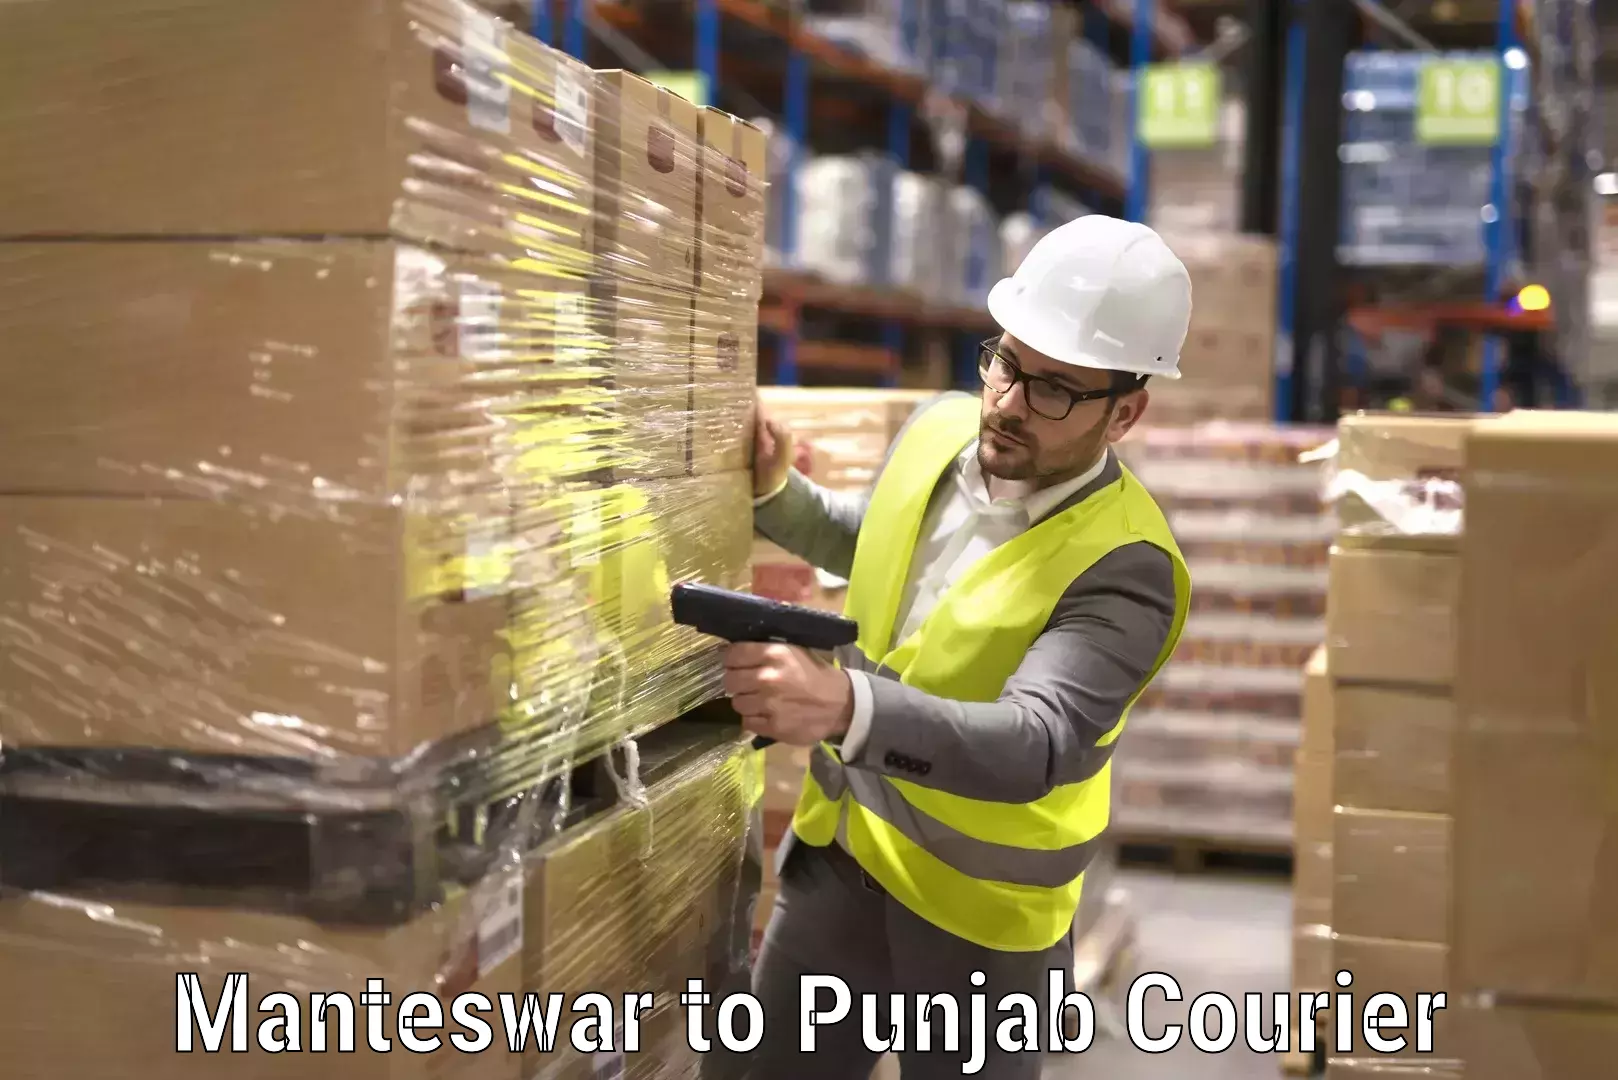 Furniture moving specialists Manteswar to Punjab